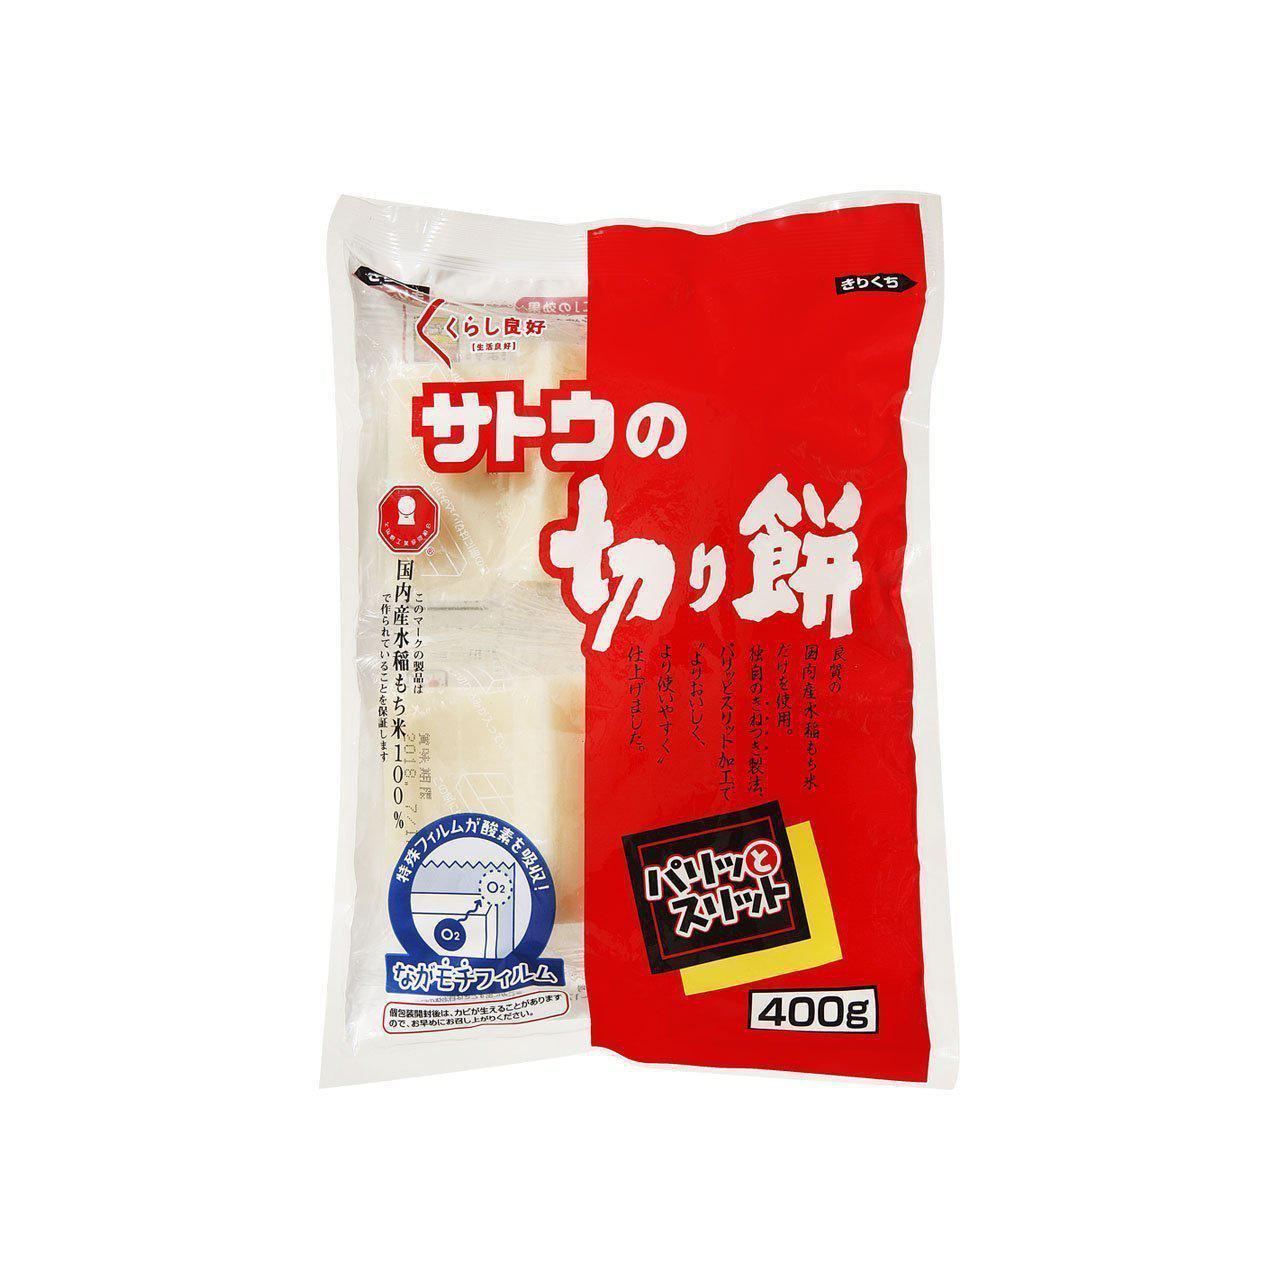 Sato Kirimochi Dried Japanese Rice Cake 400g